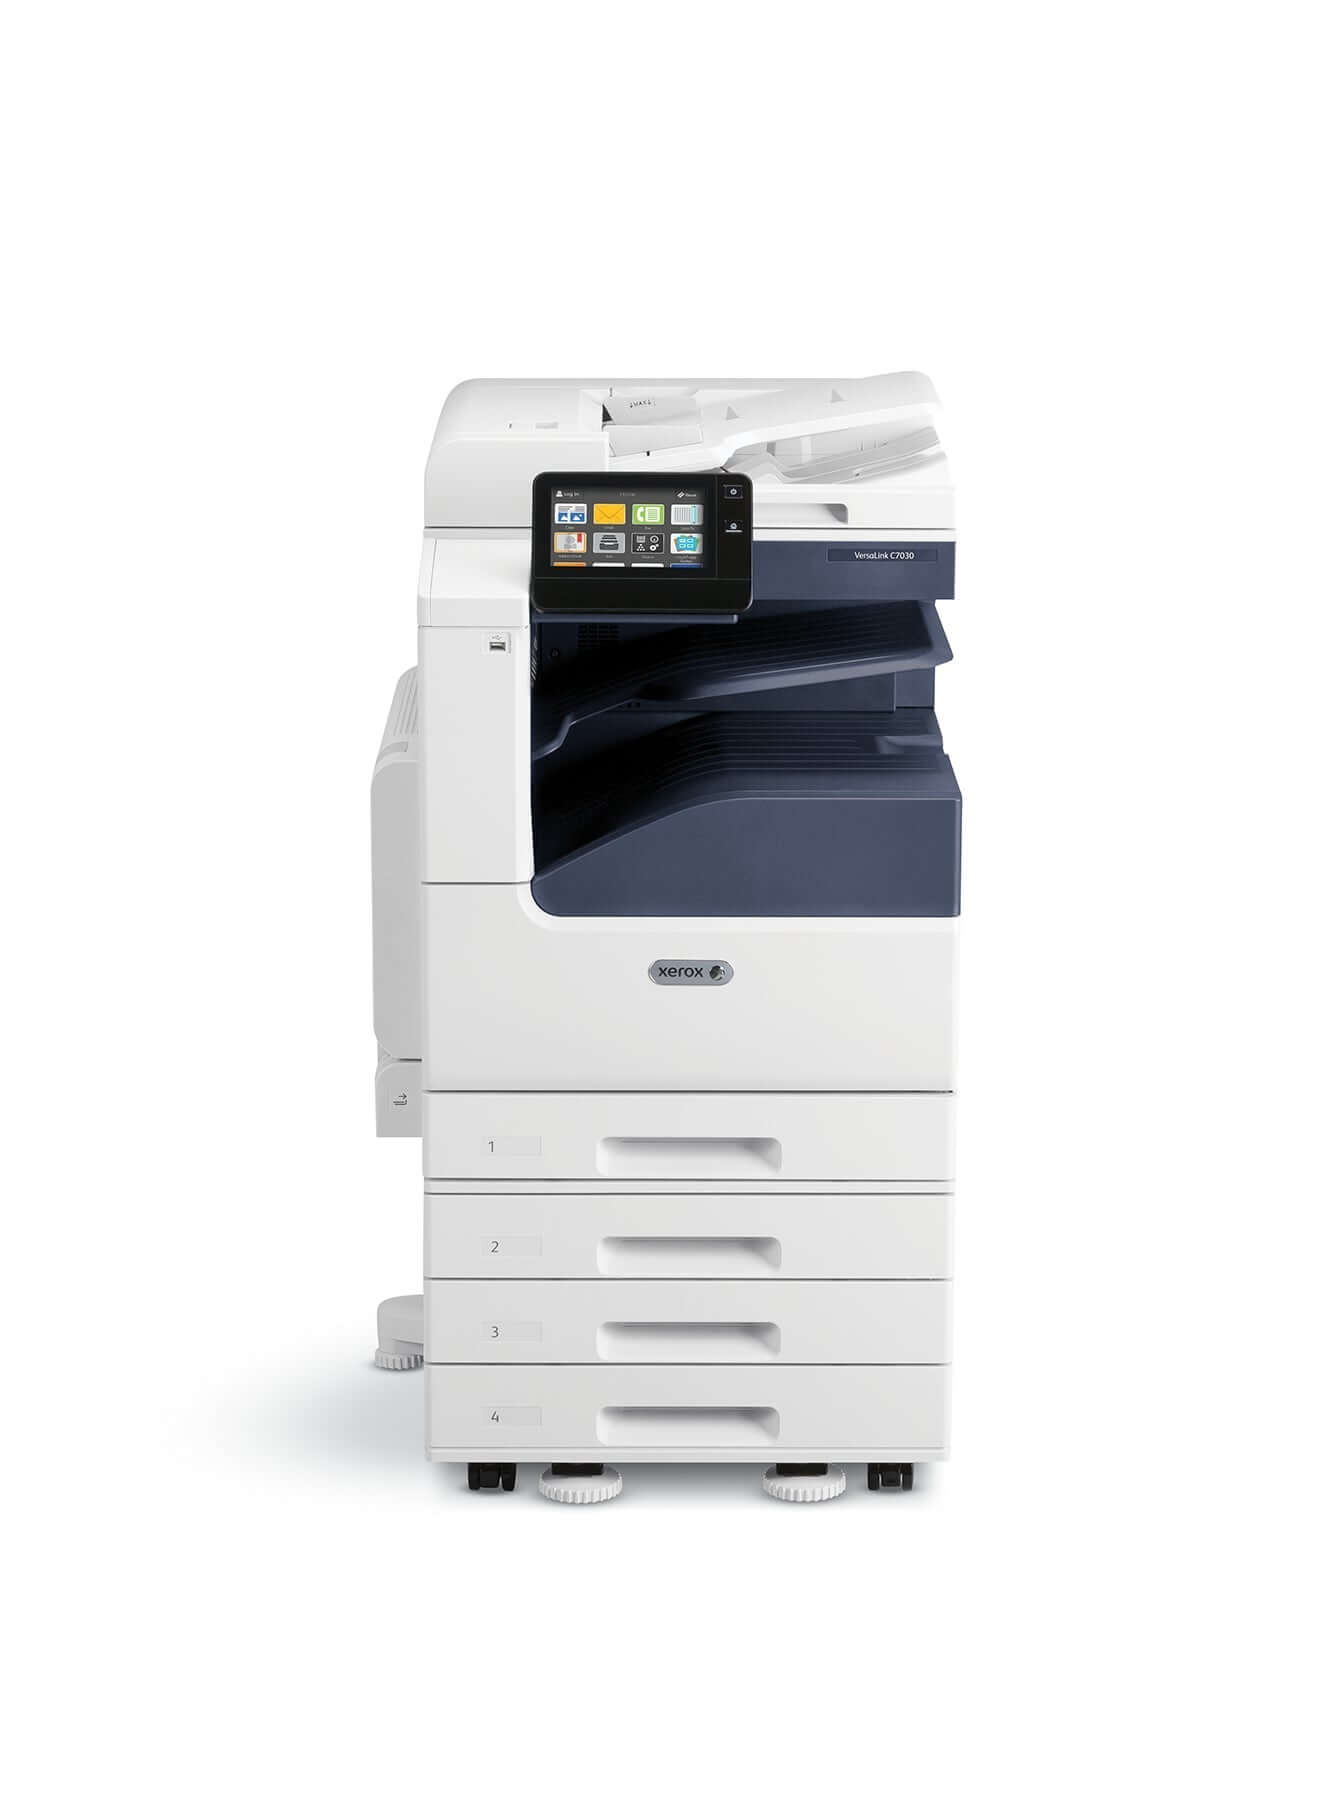 Xerox VersaLink C7030 Colour MultiFunction Printer - 4 trays - PreOwned + Warranty